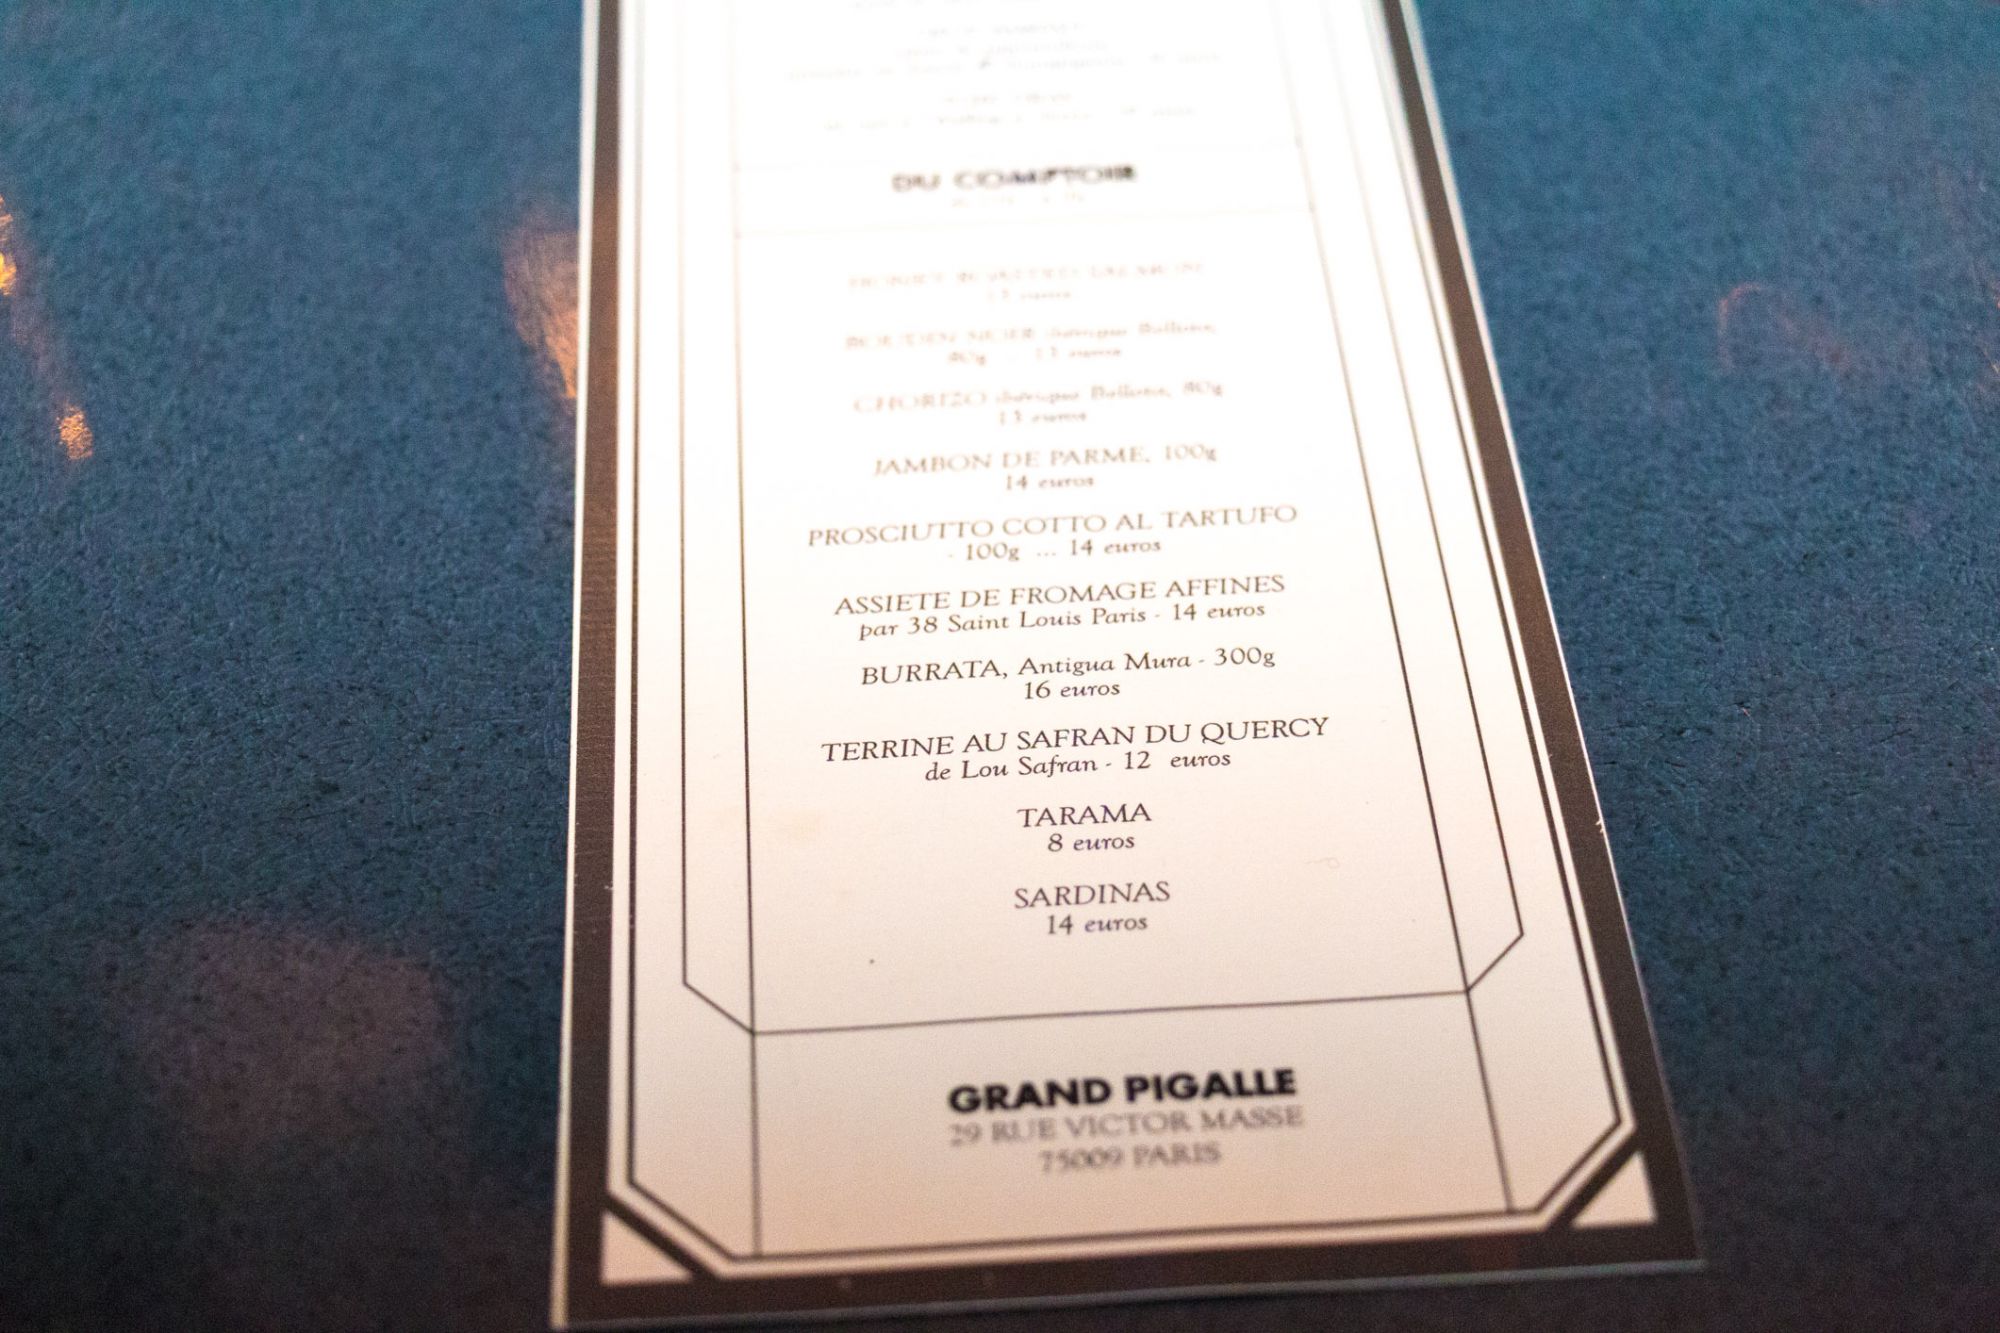 Inauguration du Grand Pigalle Hotel et de son bar, mardi 24 mars 2015 - Photo 12